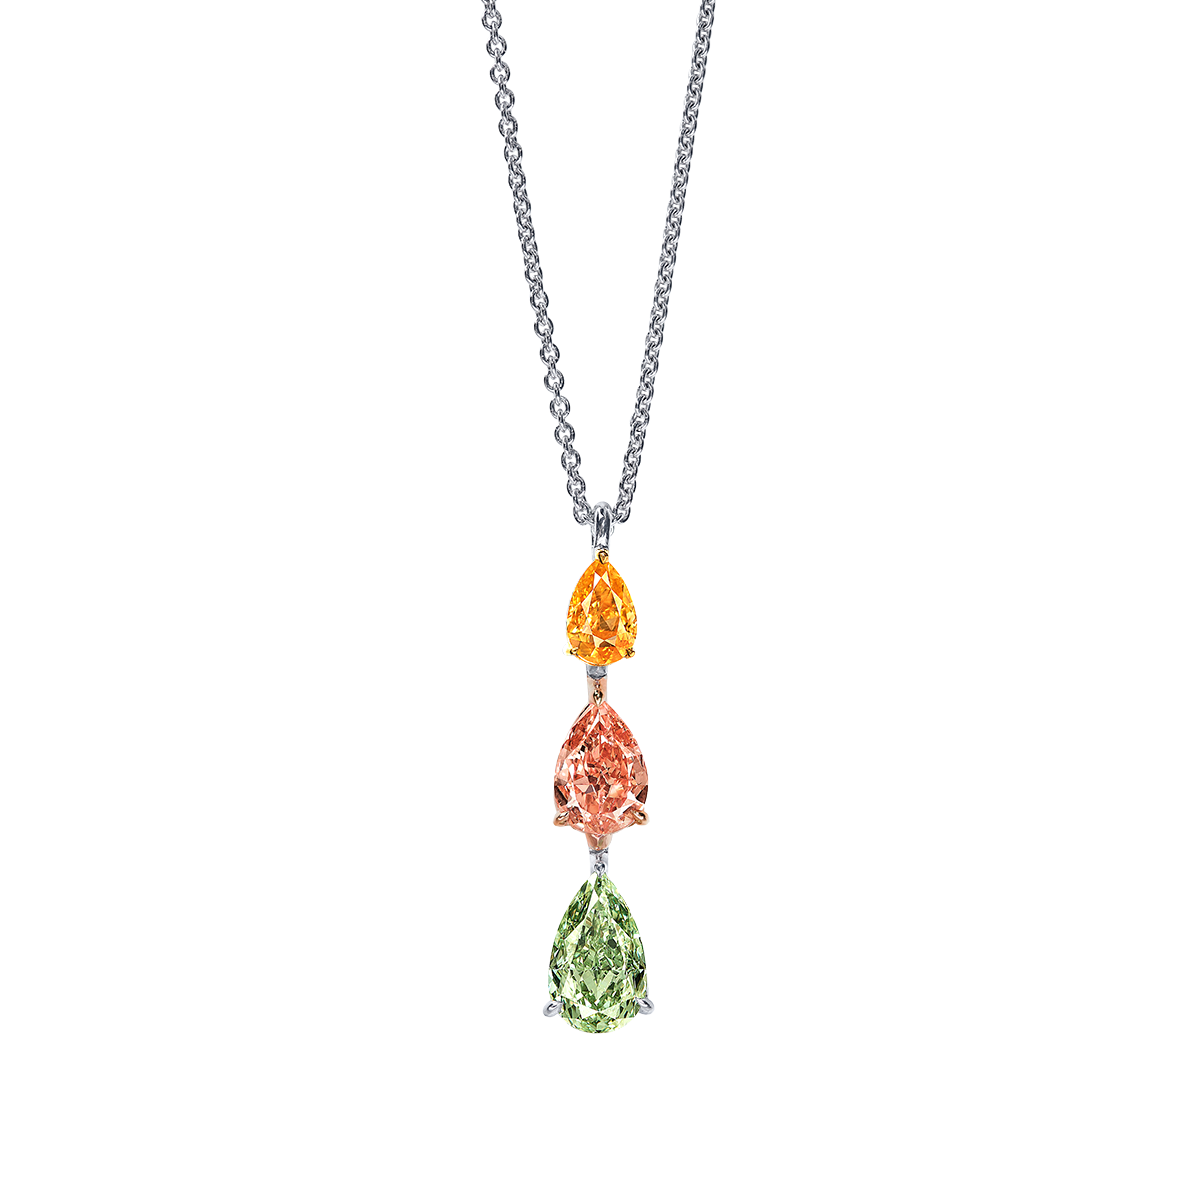 GIA 6.17克拉 彩鑽鑽石墜鍊
Multi-Colored Diamond and
Diamond Pendant Necklace